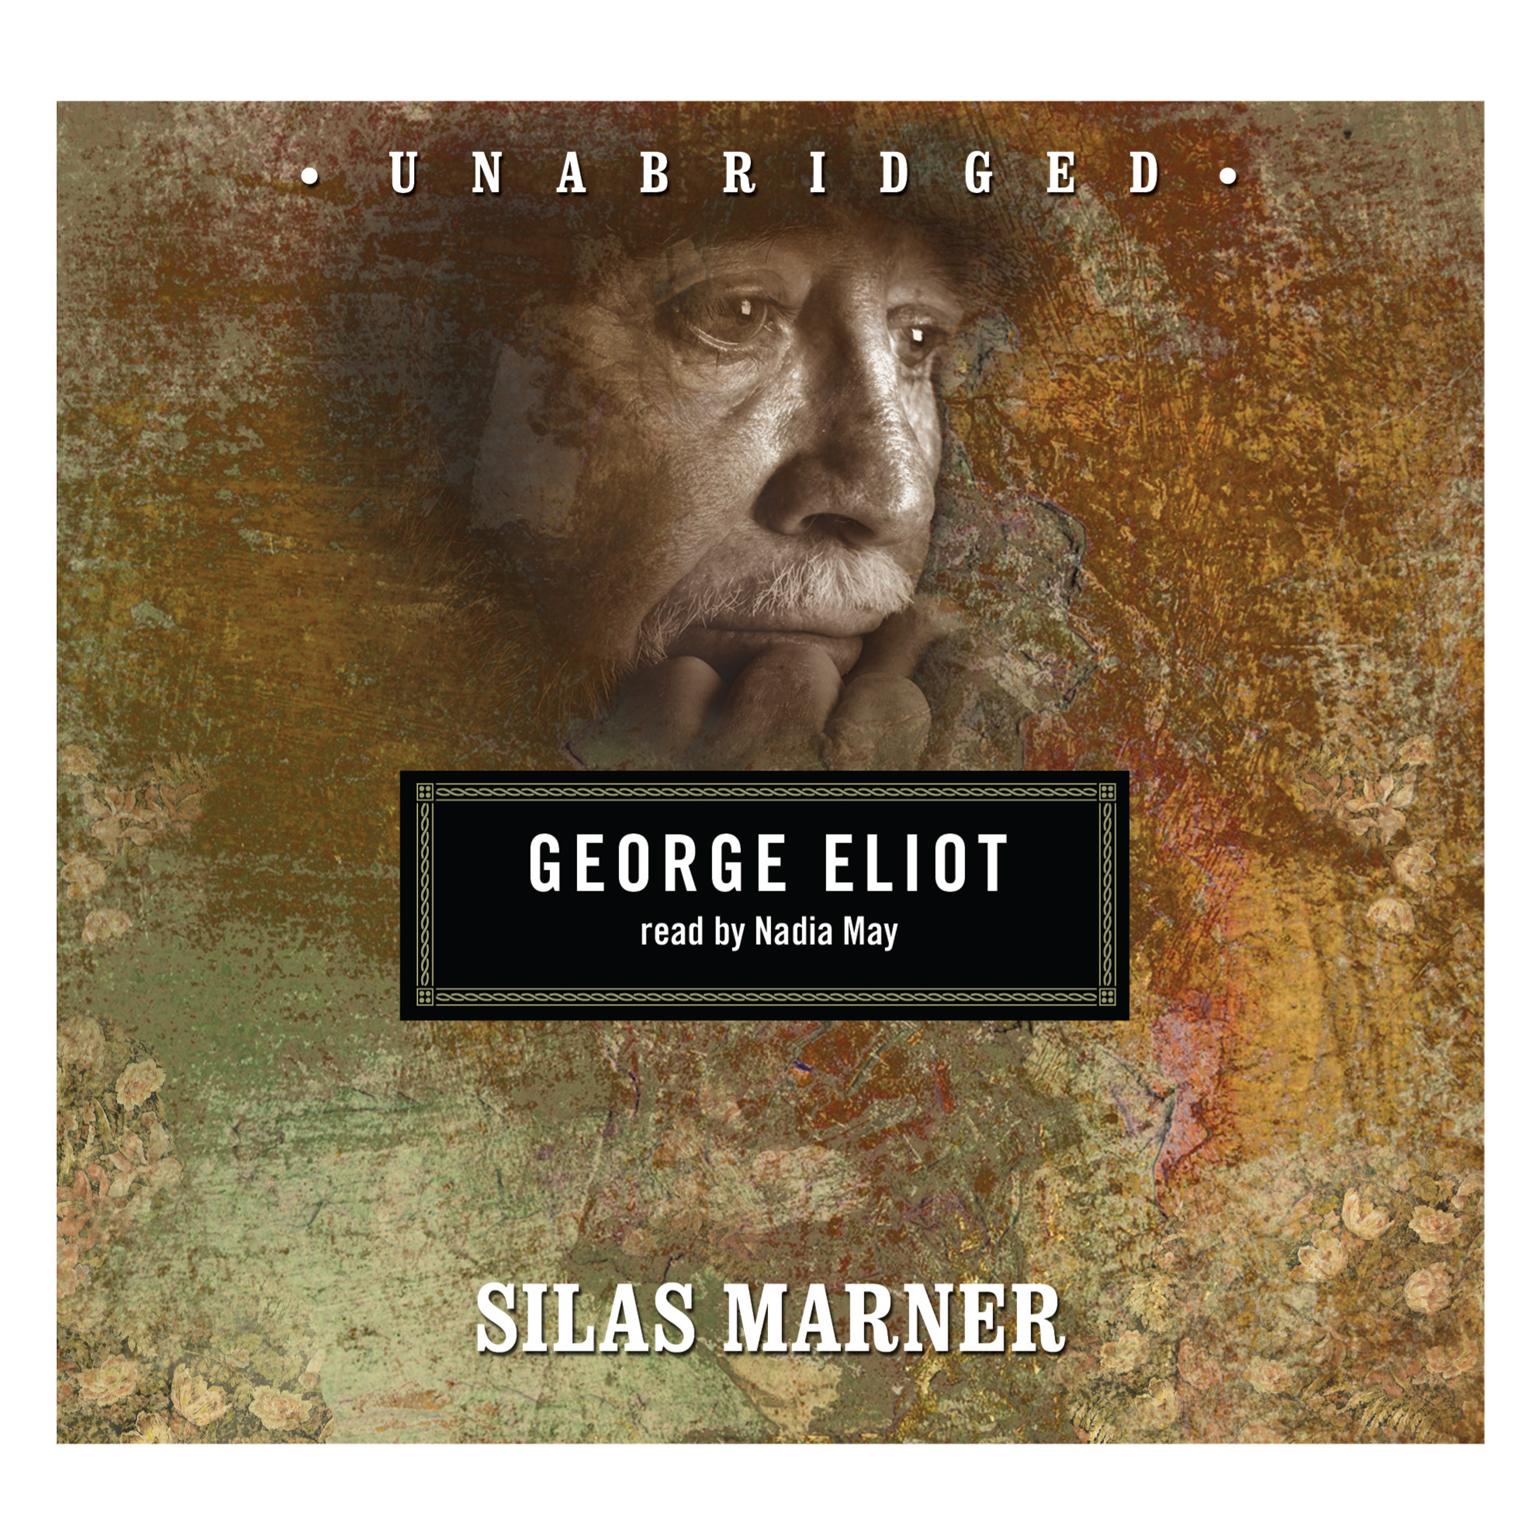 Silas Marner Audiobook, by George Eliot